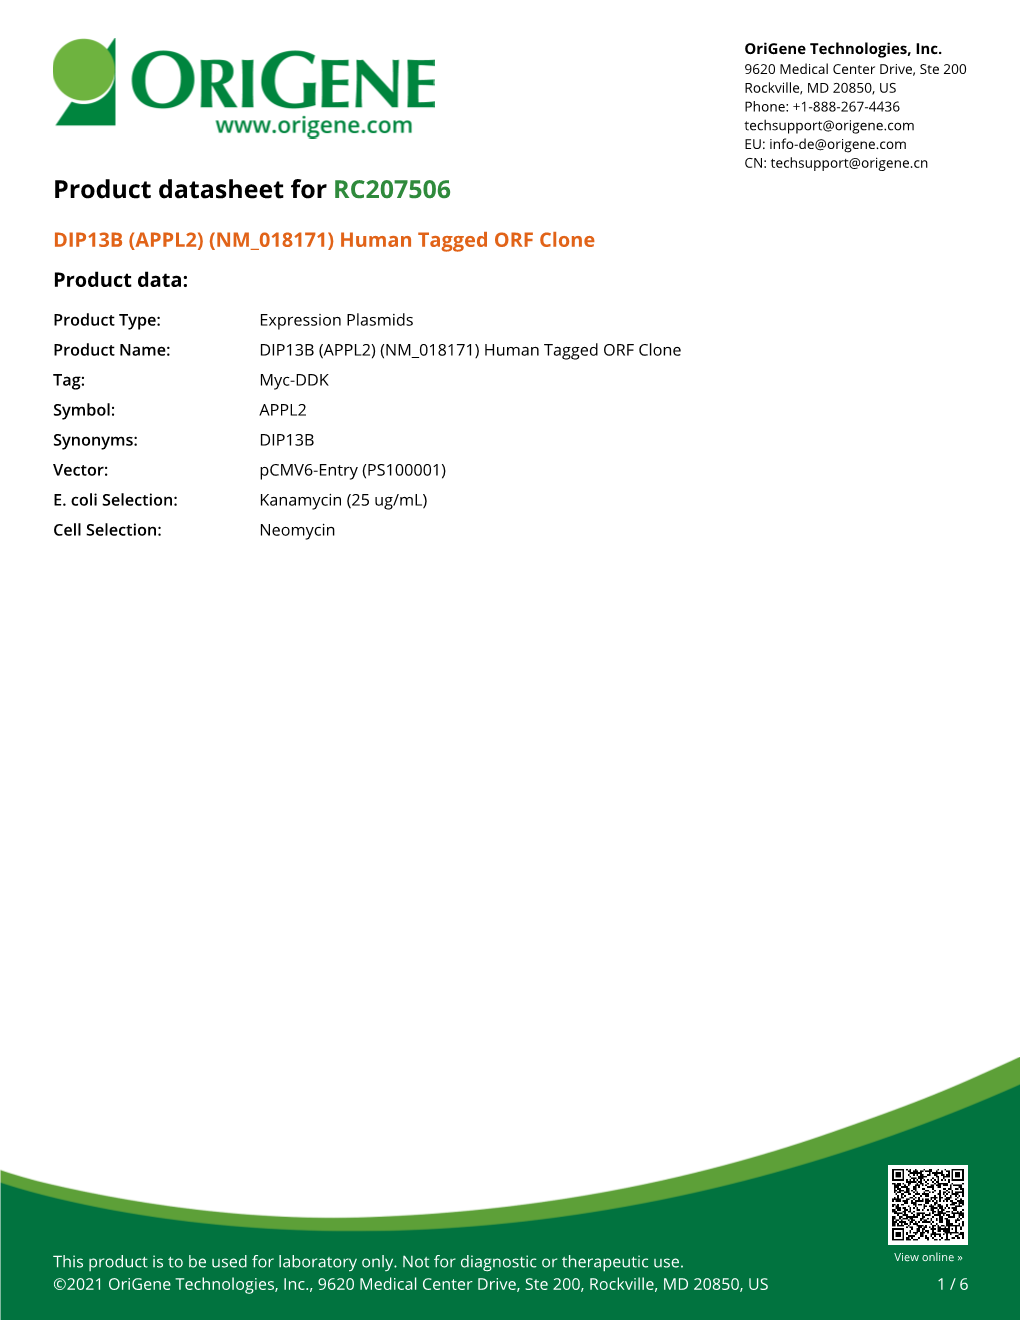 DIP13B (APPL2) (NM 018171) Human Tagged ORF Clone Product Data